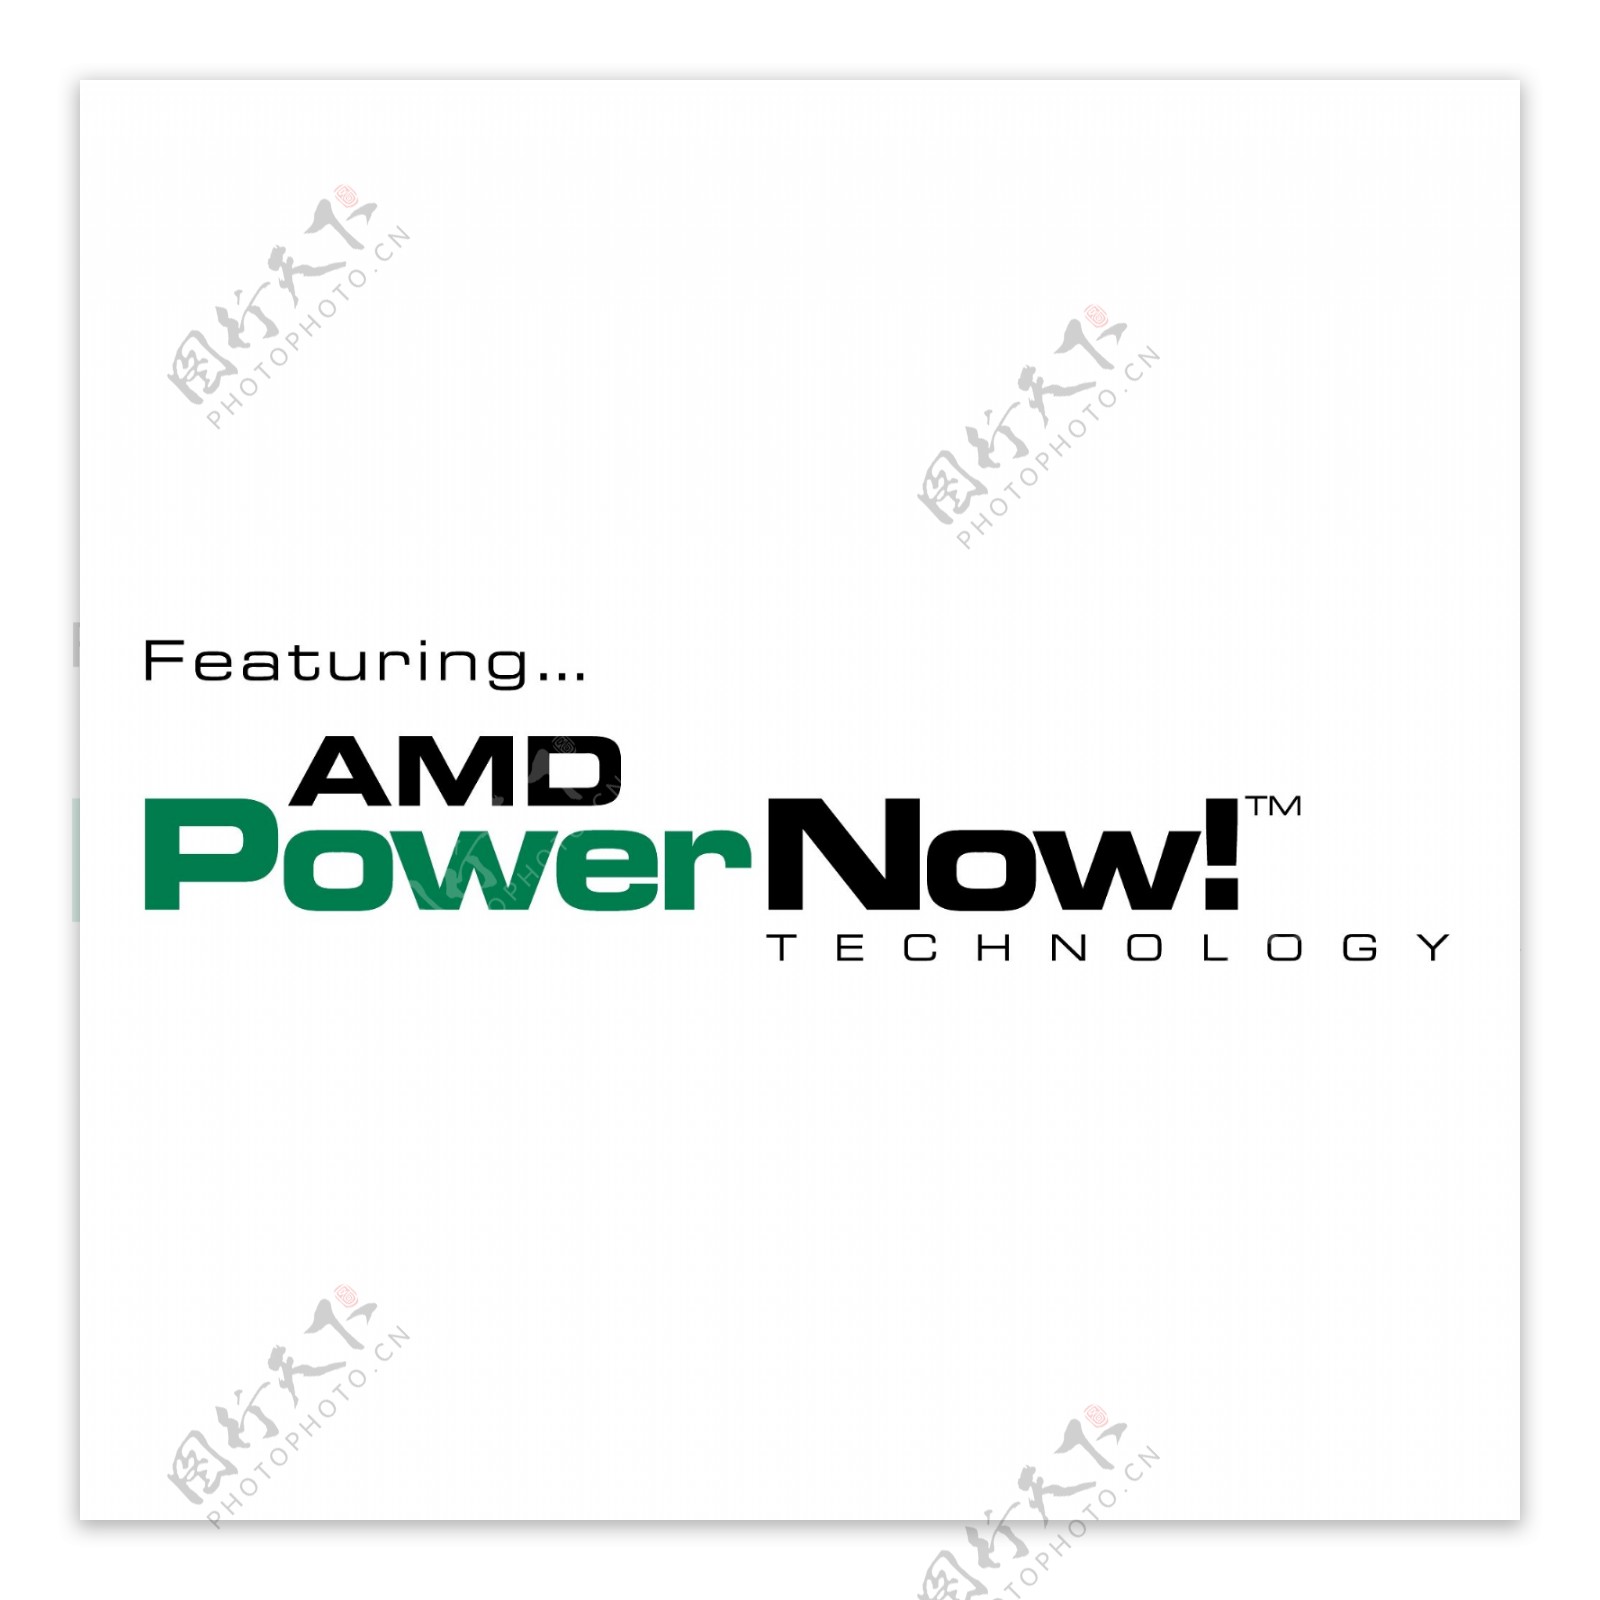 AMDPowerNow